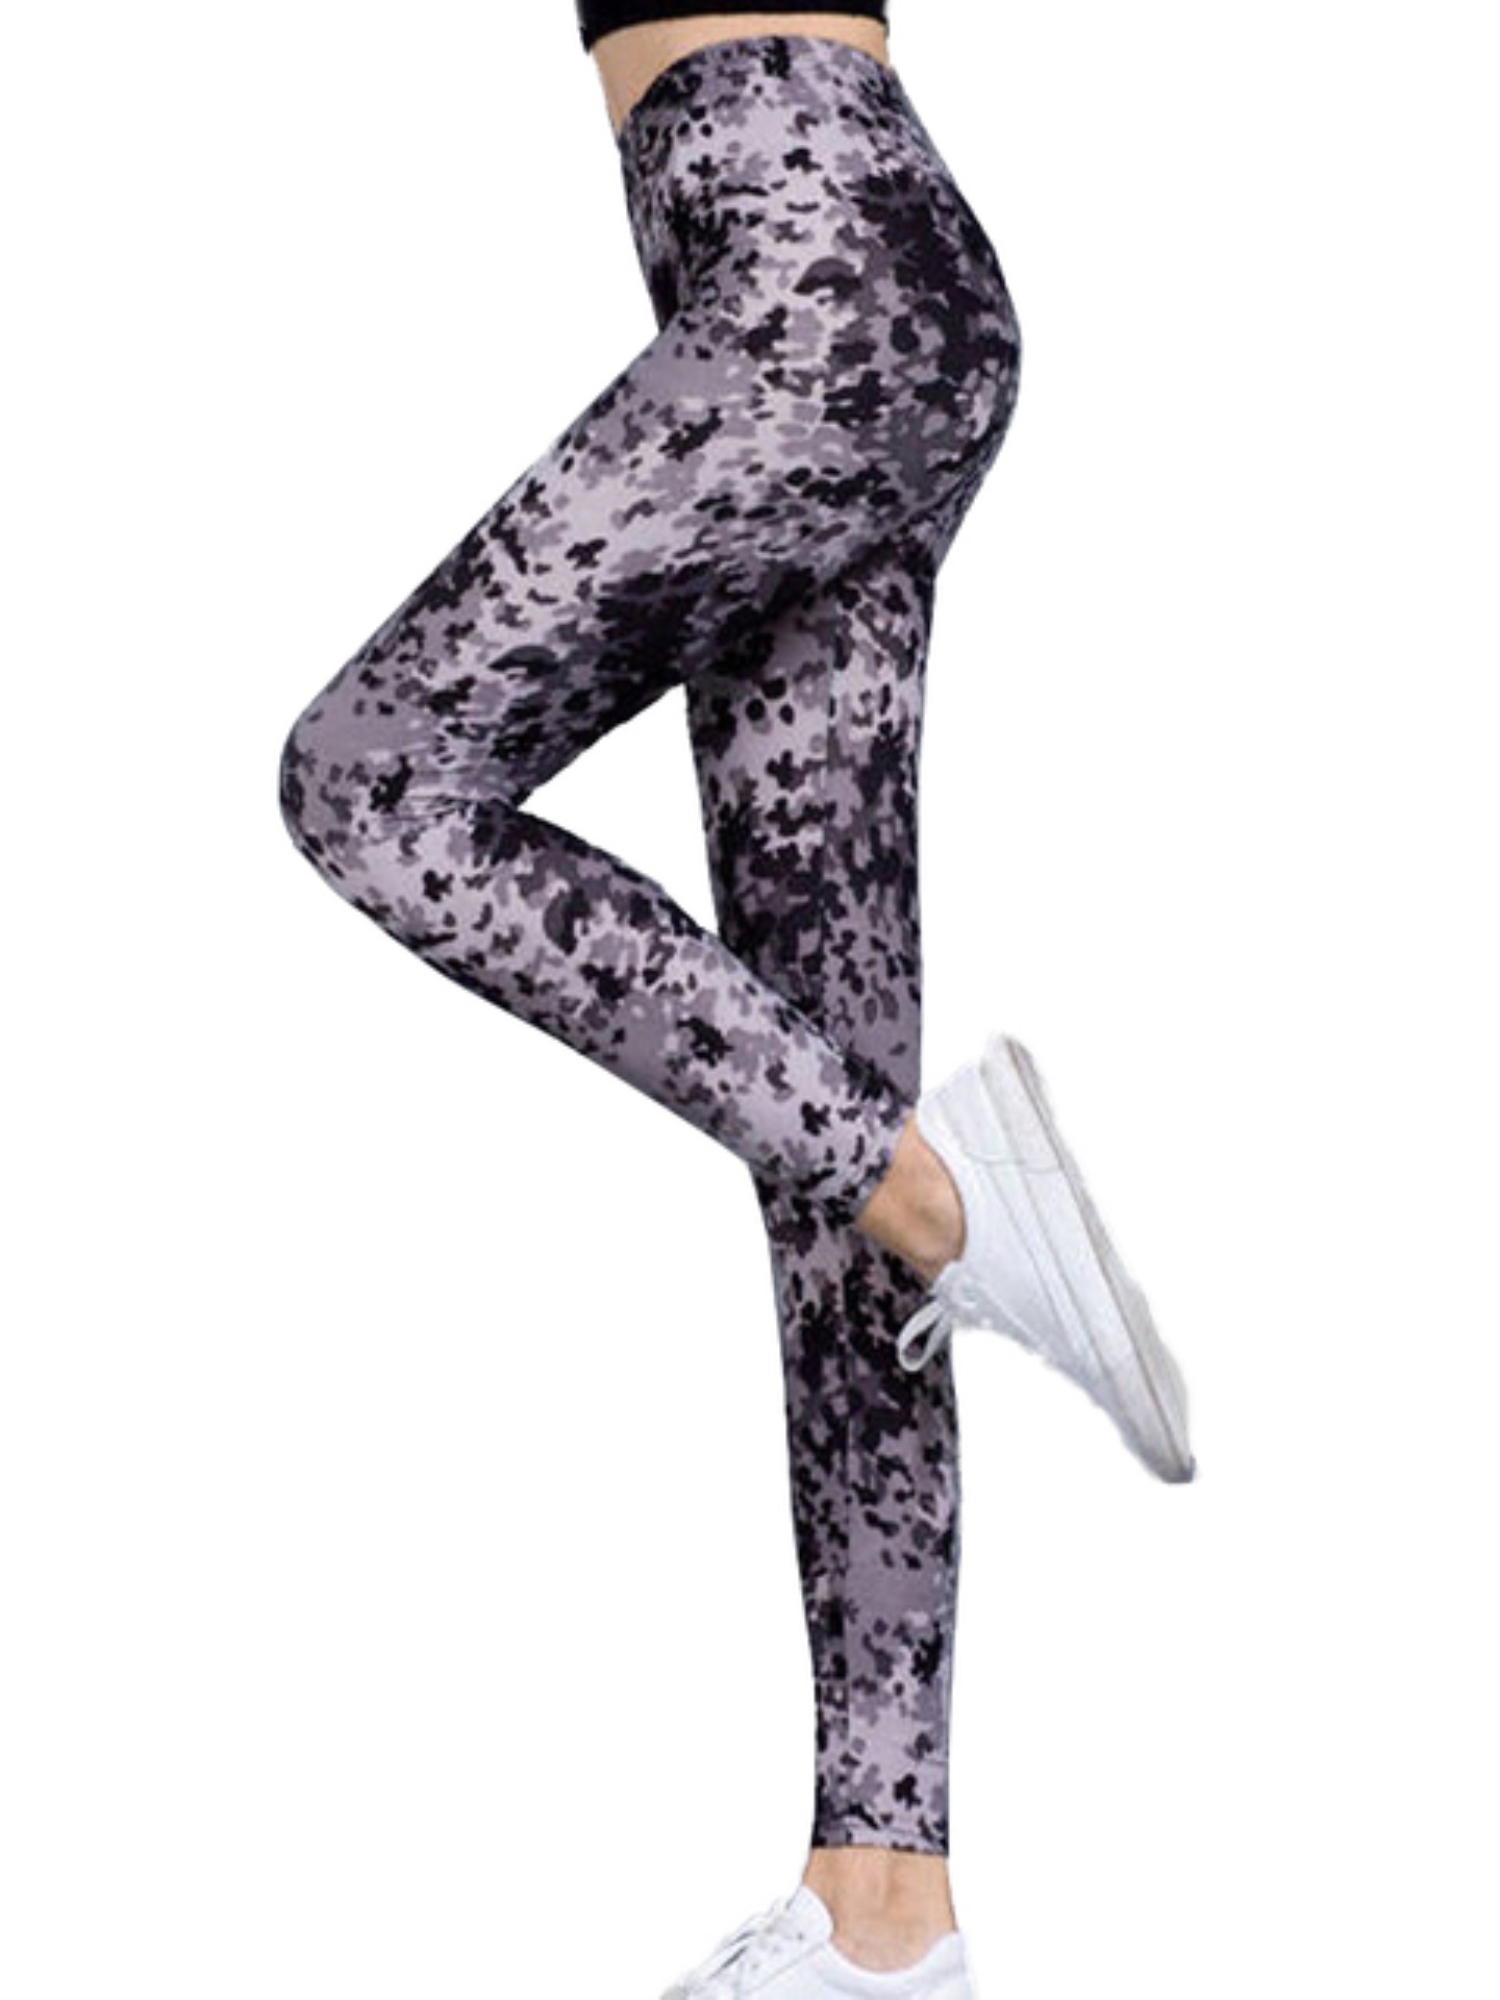 VISNXGI High Quality Women Leggings High Elastic Skinny Camouflage